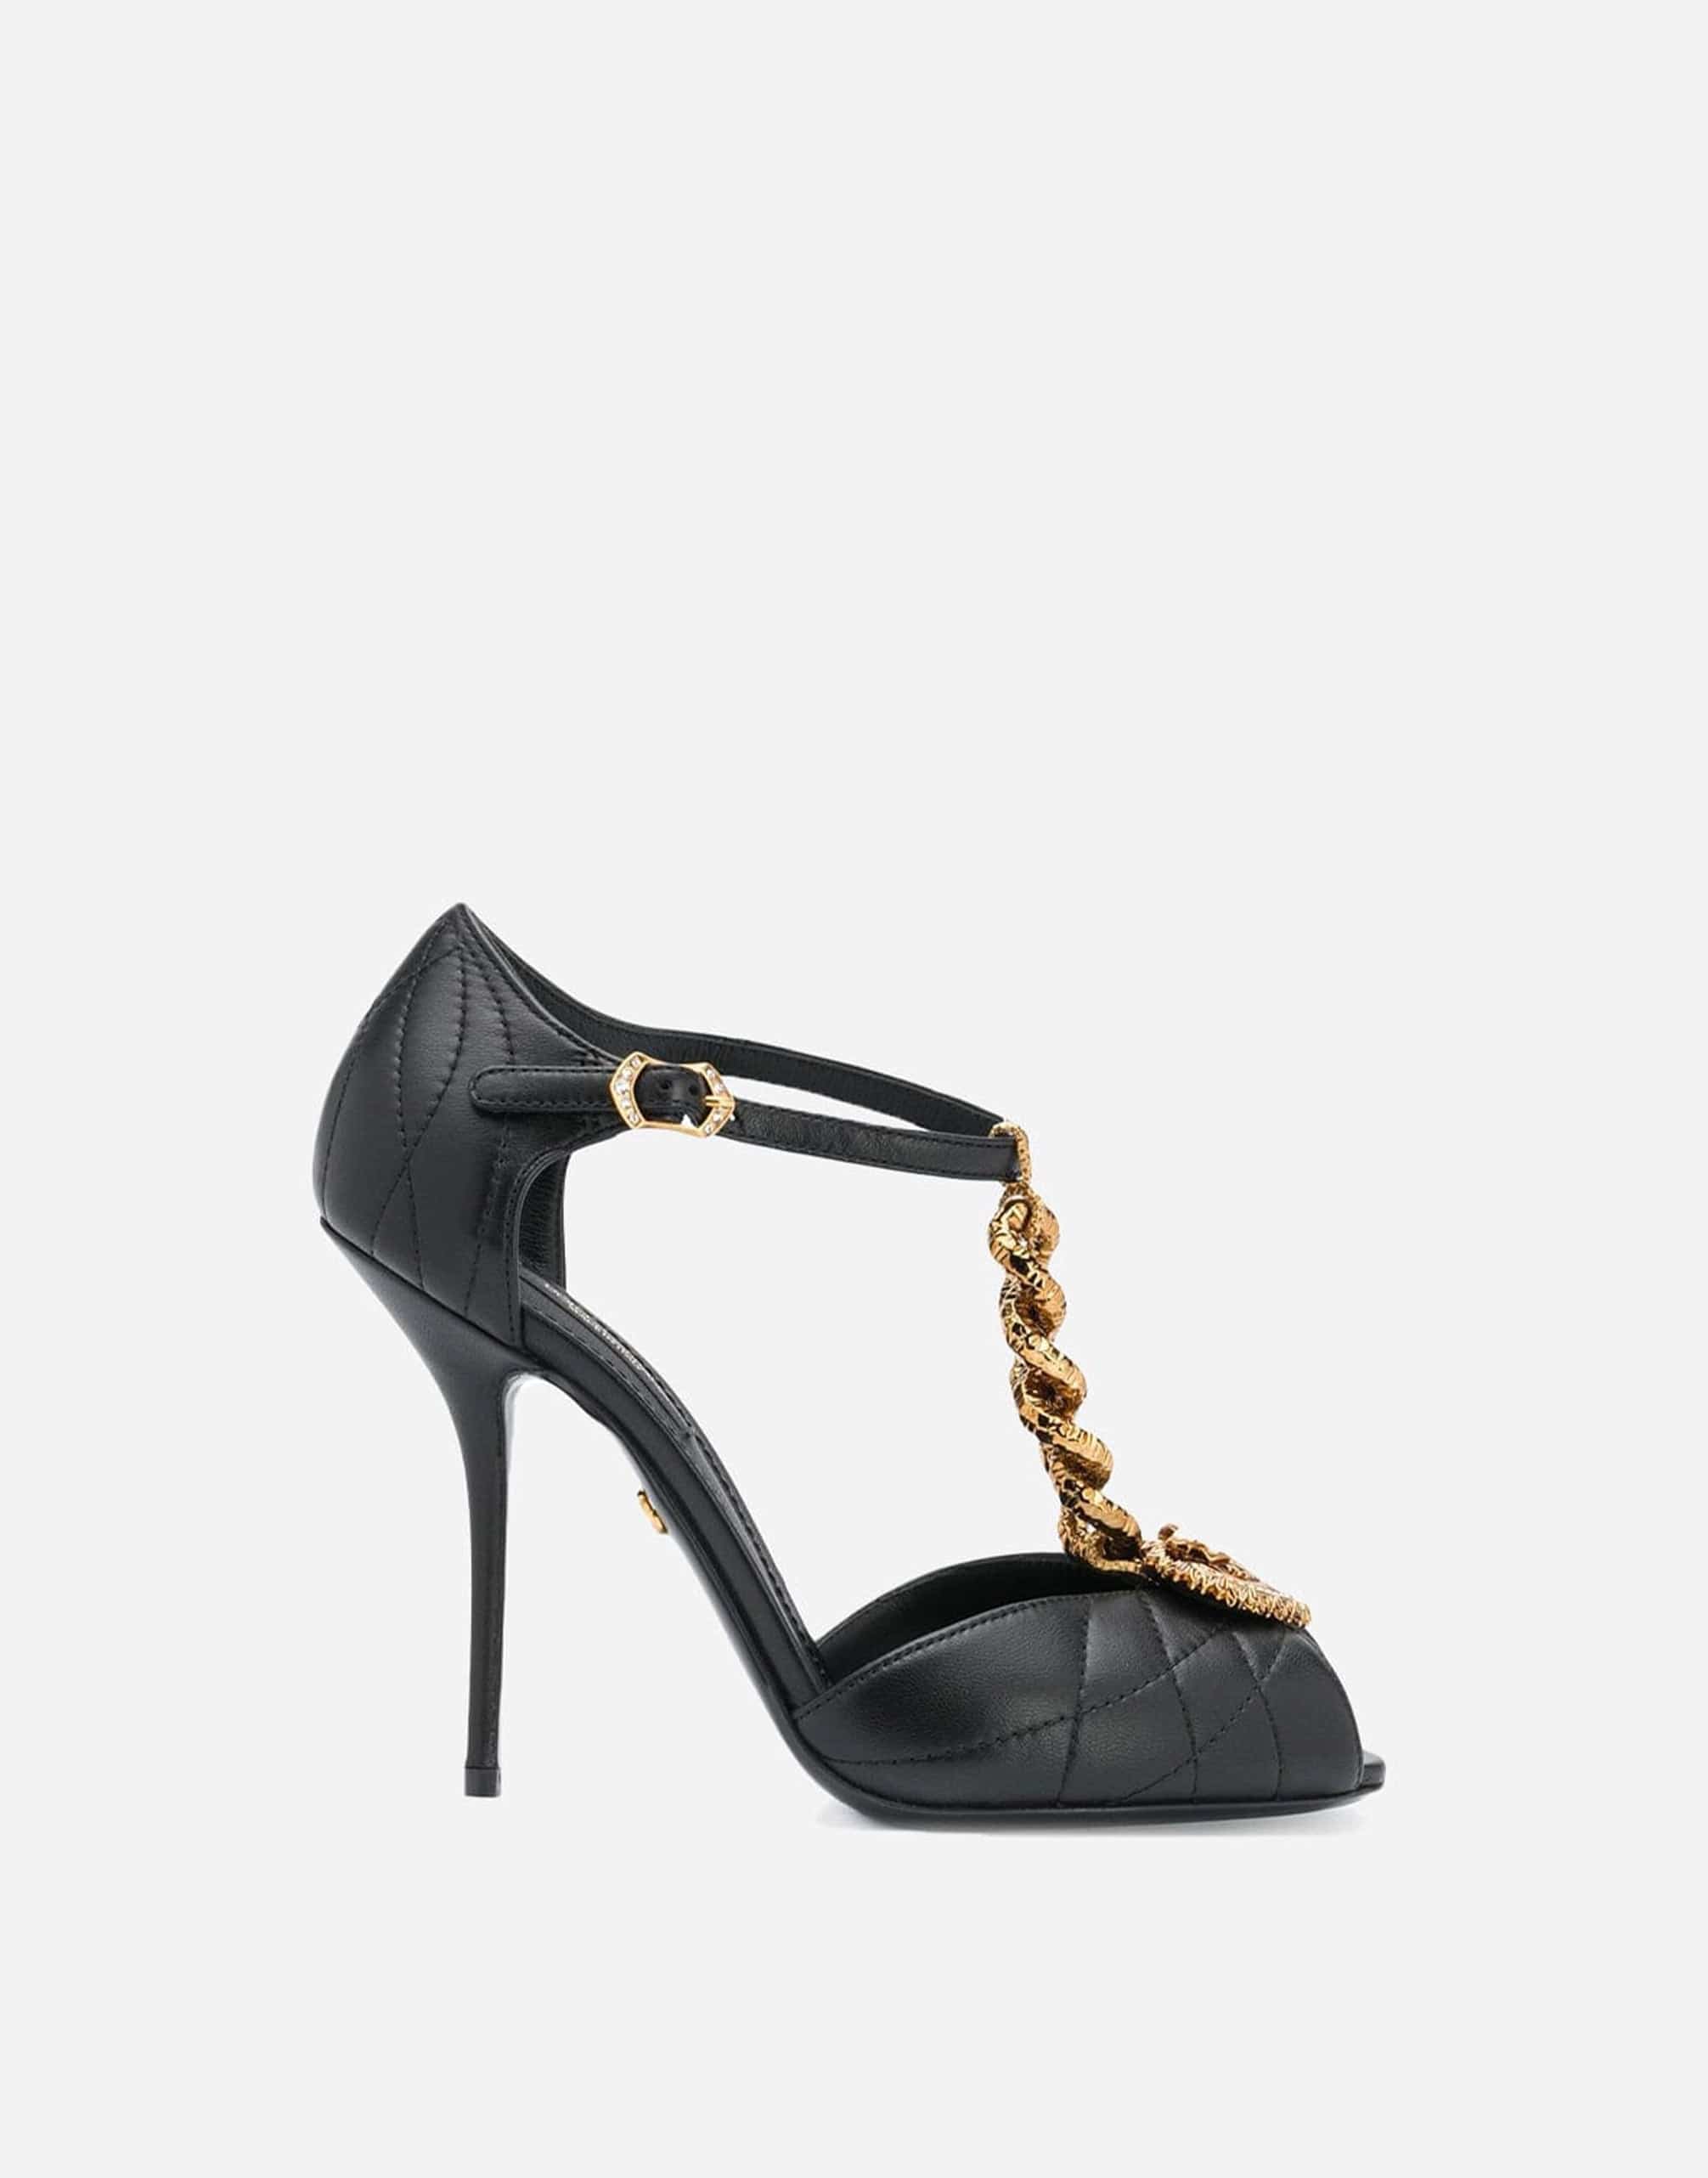 Dolce & Gabbana Bette Devotion T-Strap Sandals